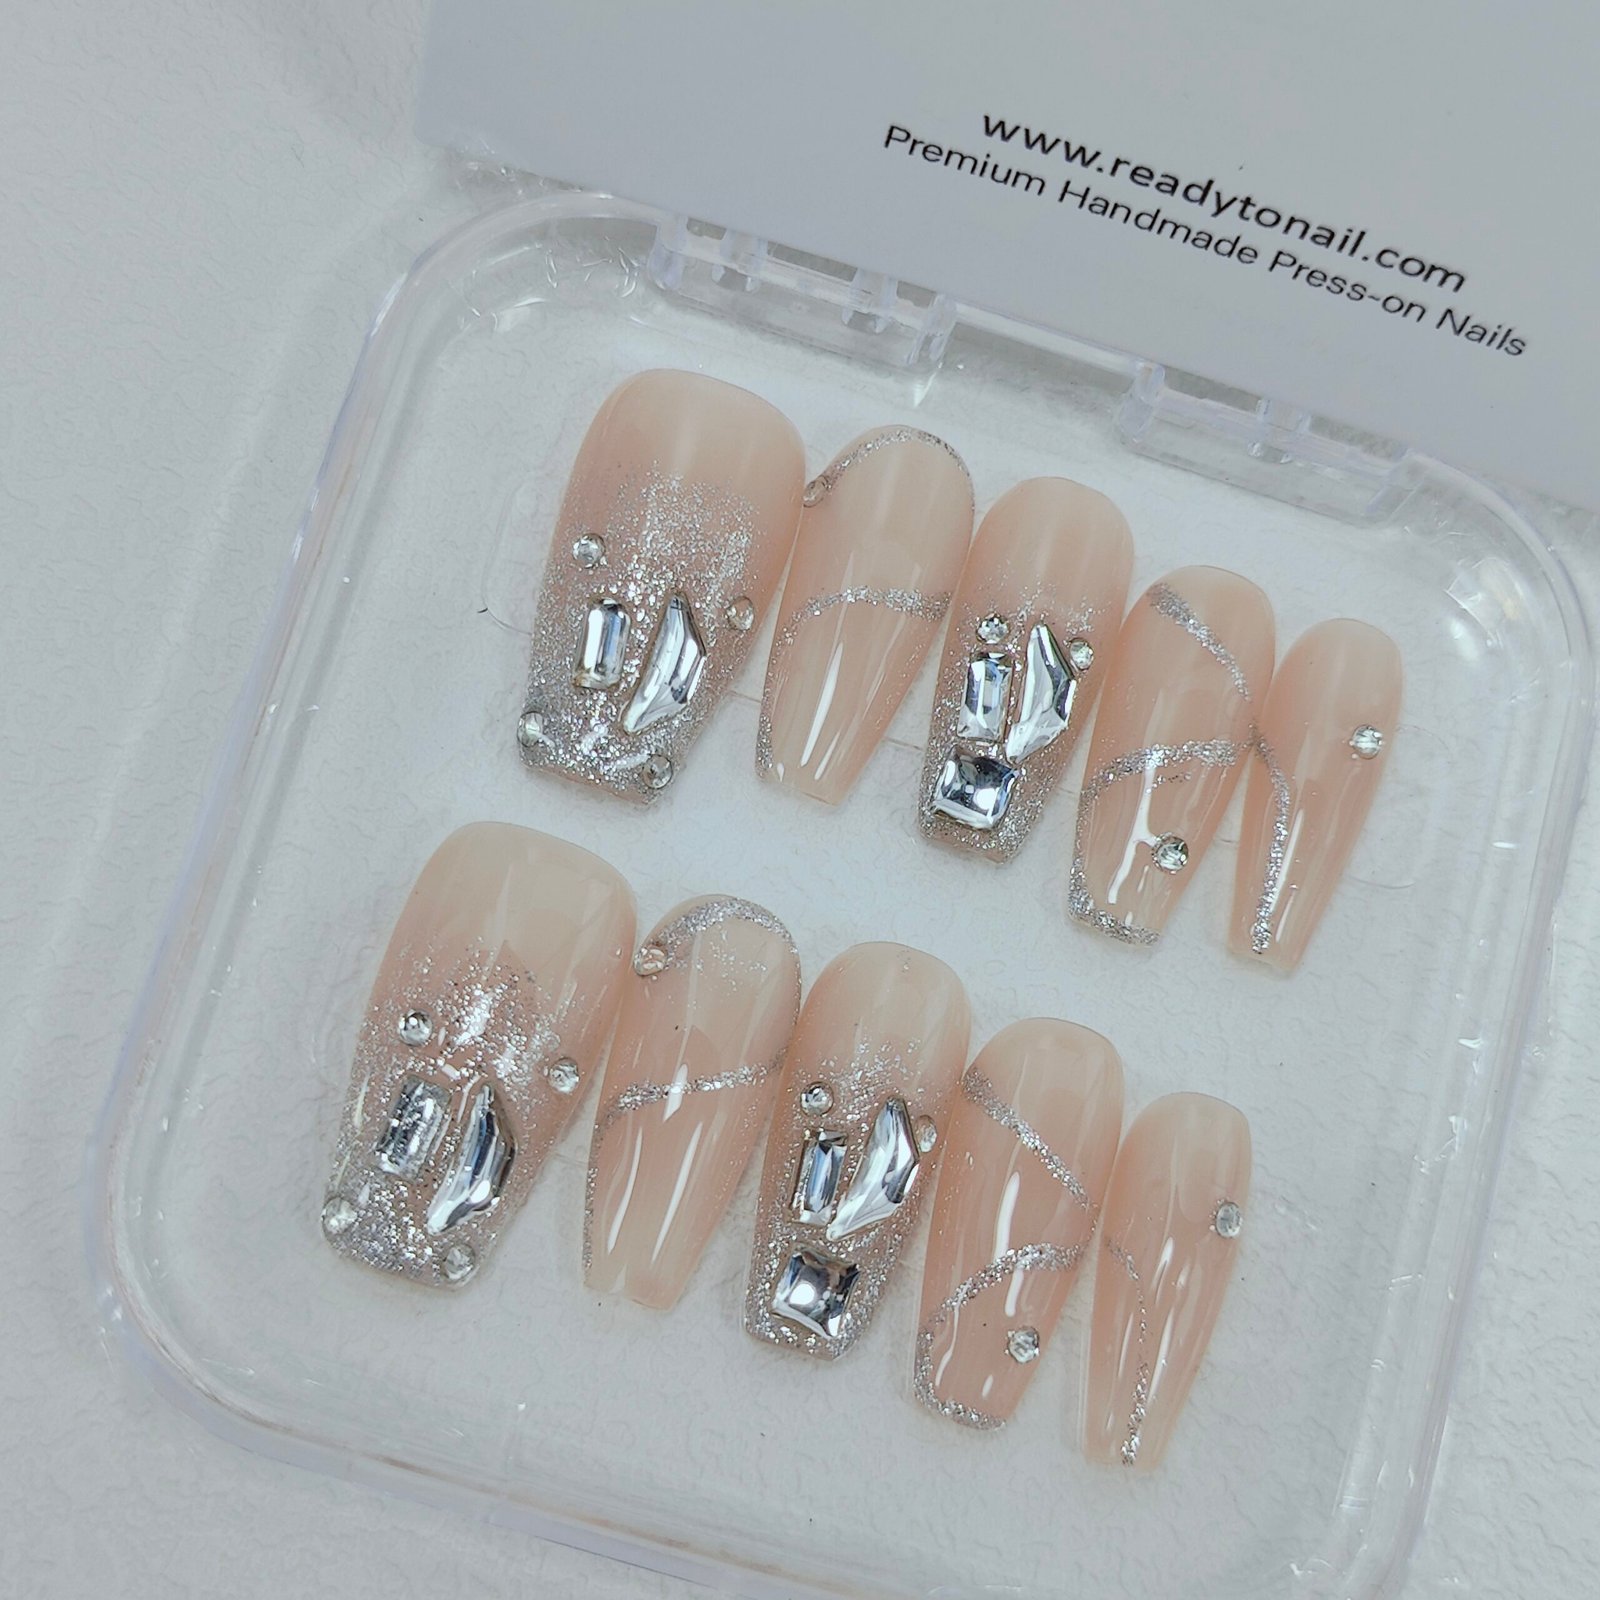 Peachy Diamond sparkly nails | Reusable Premium Sliver glitter Glossy coffin Nail extensions– Readytonail